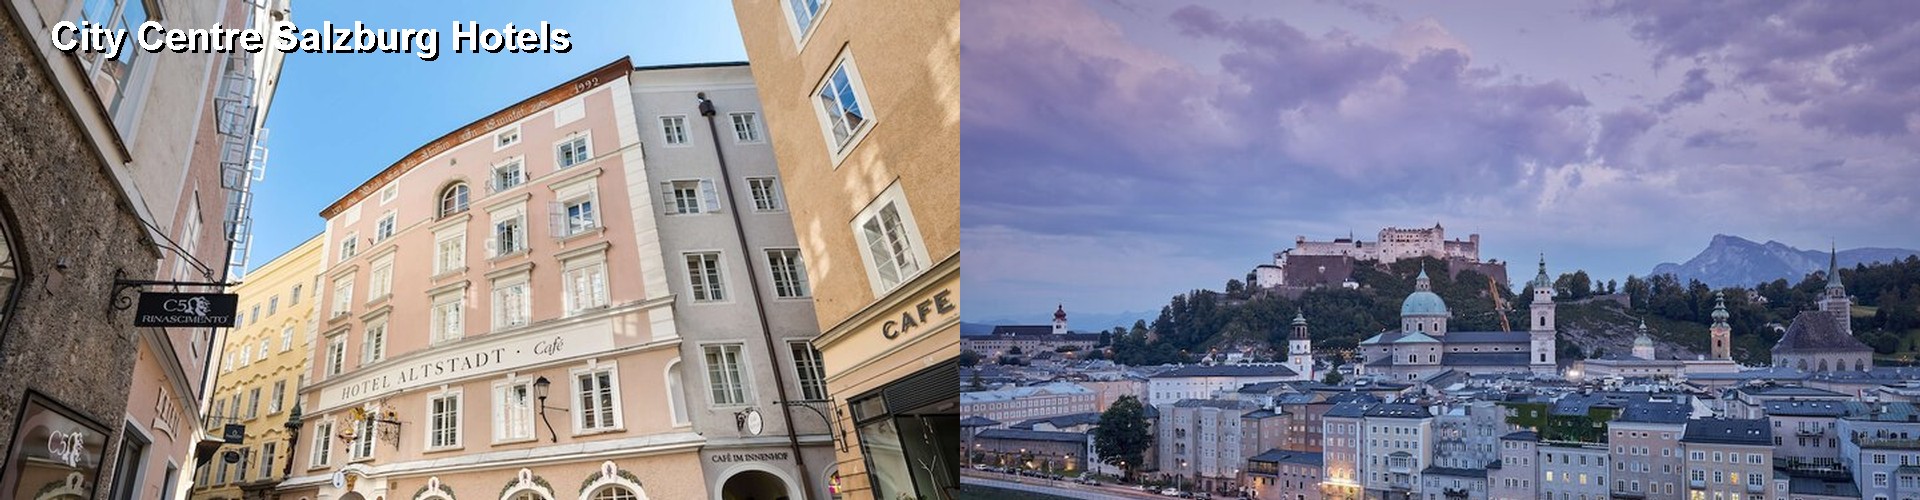 5 Best Hotels near City Centre Salzburg